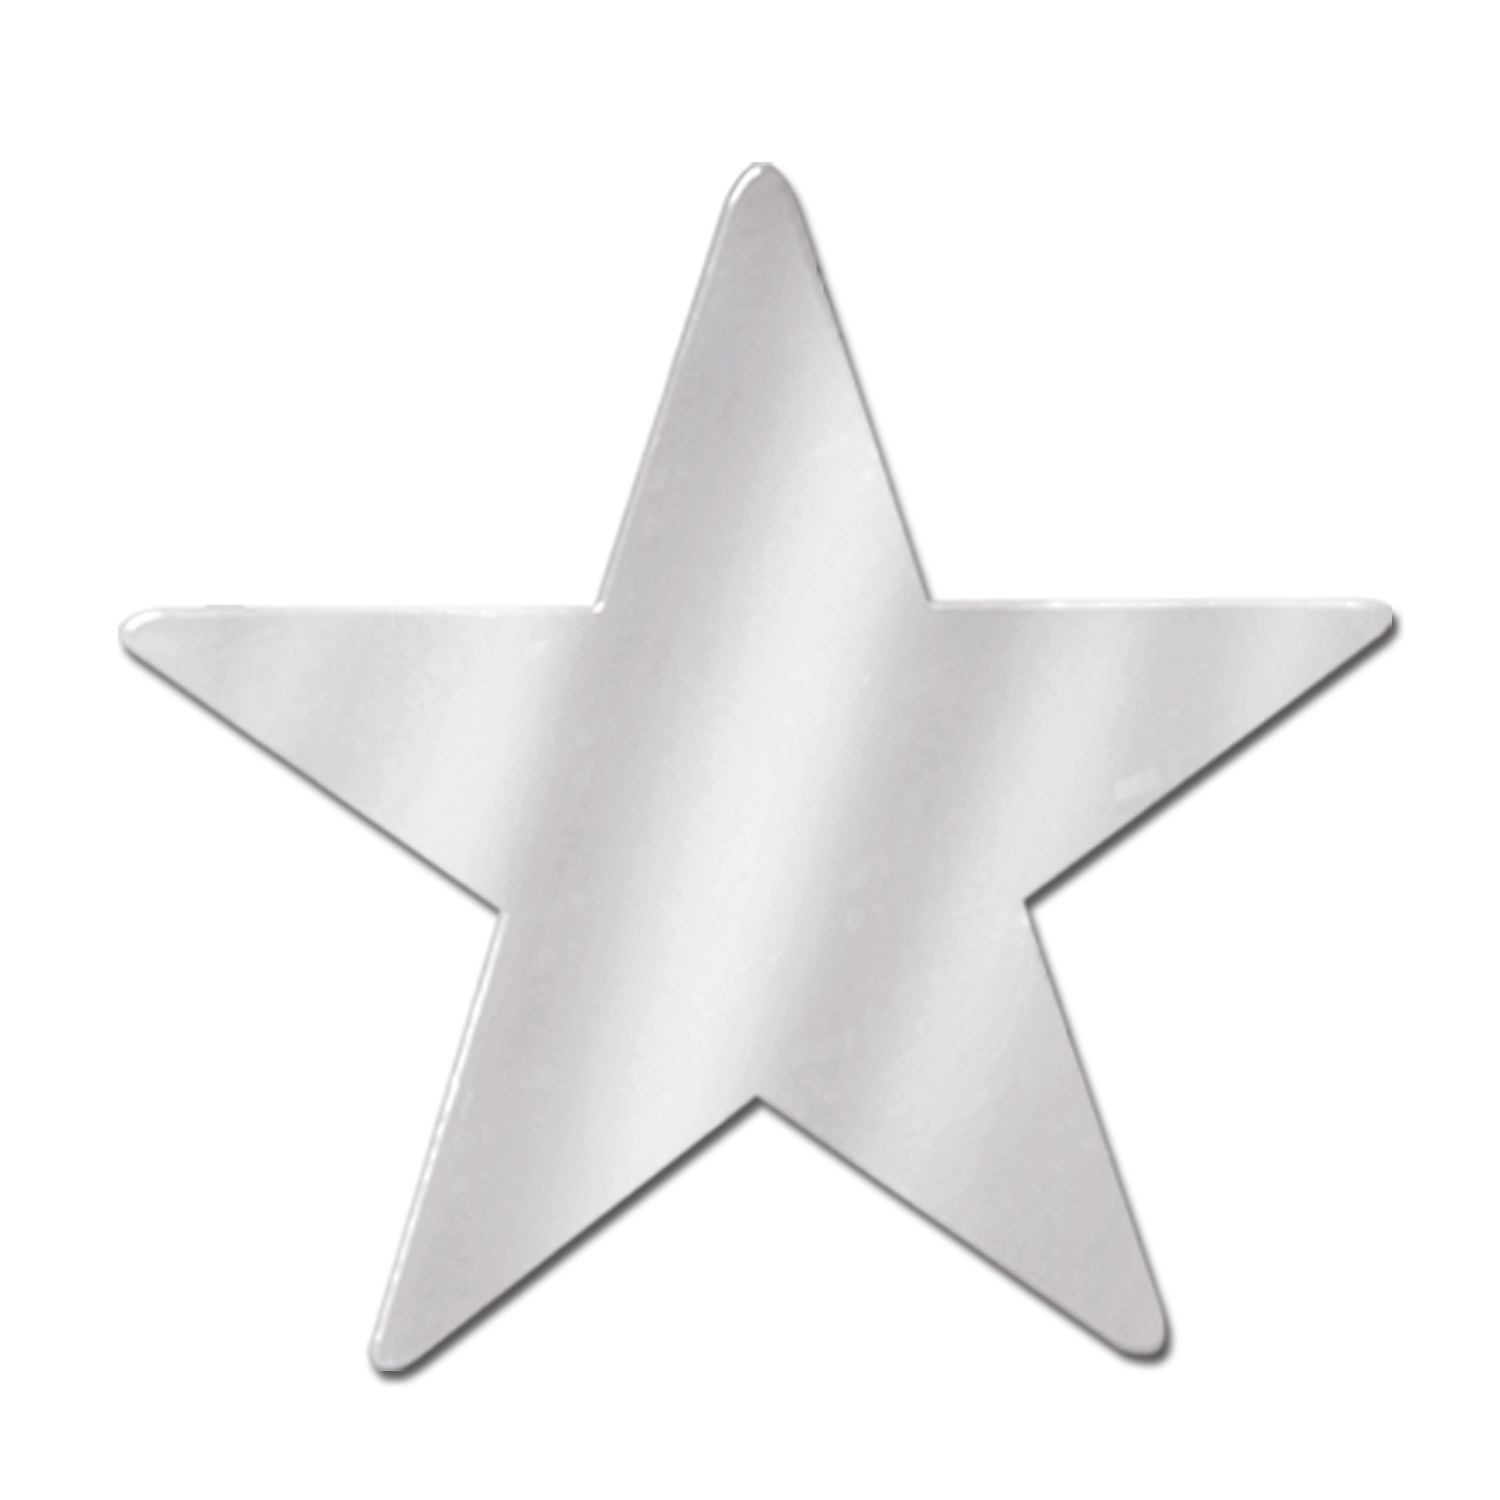 Silver card stock star cutout.